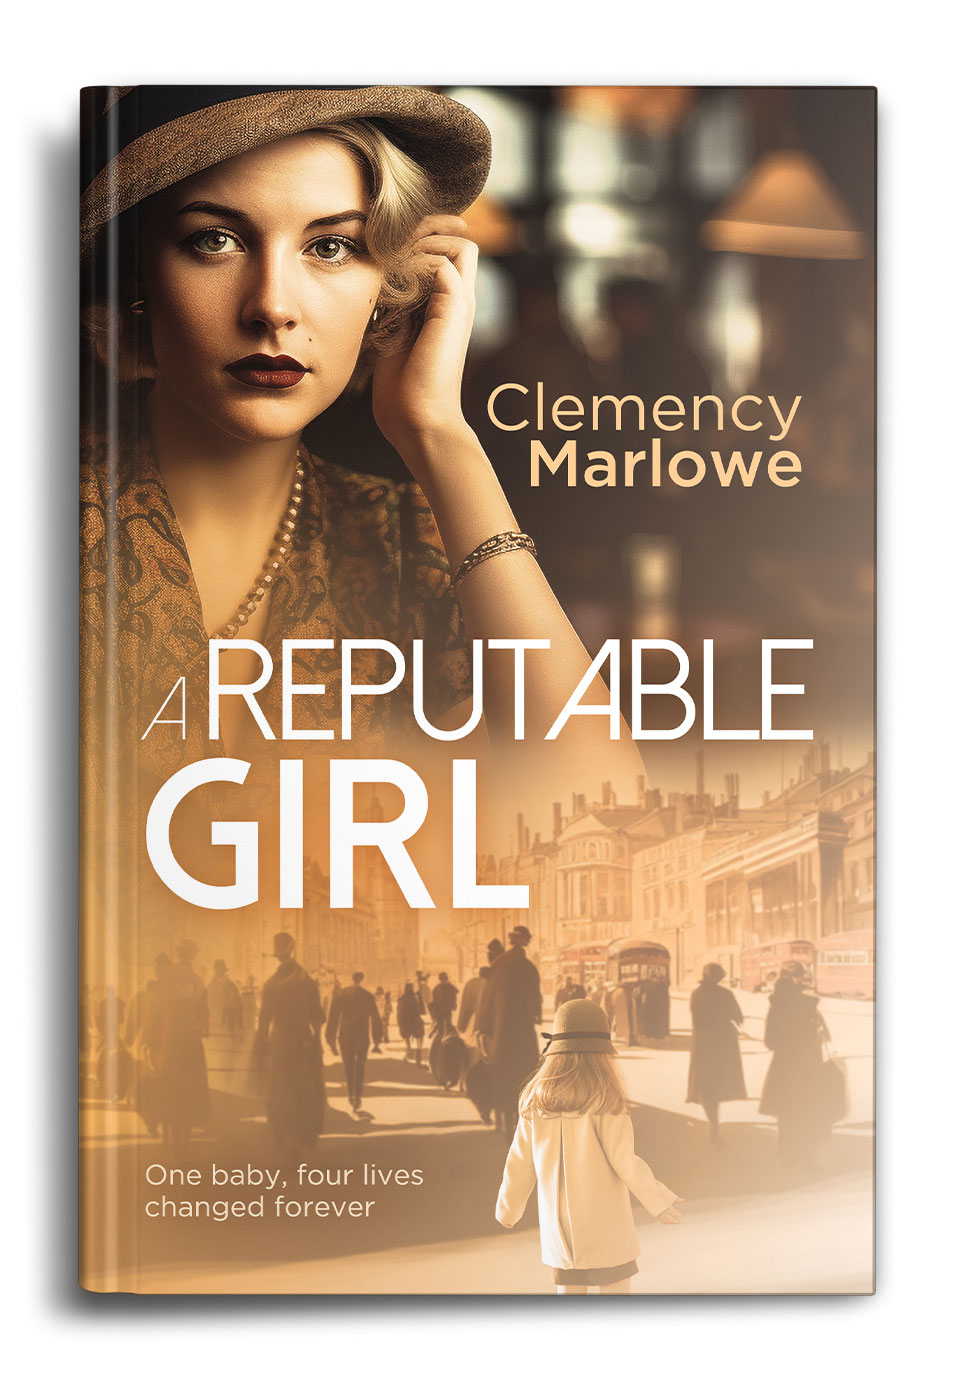 A-Reputable-Girl-by-Clemency-Marlowe